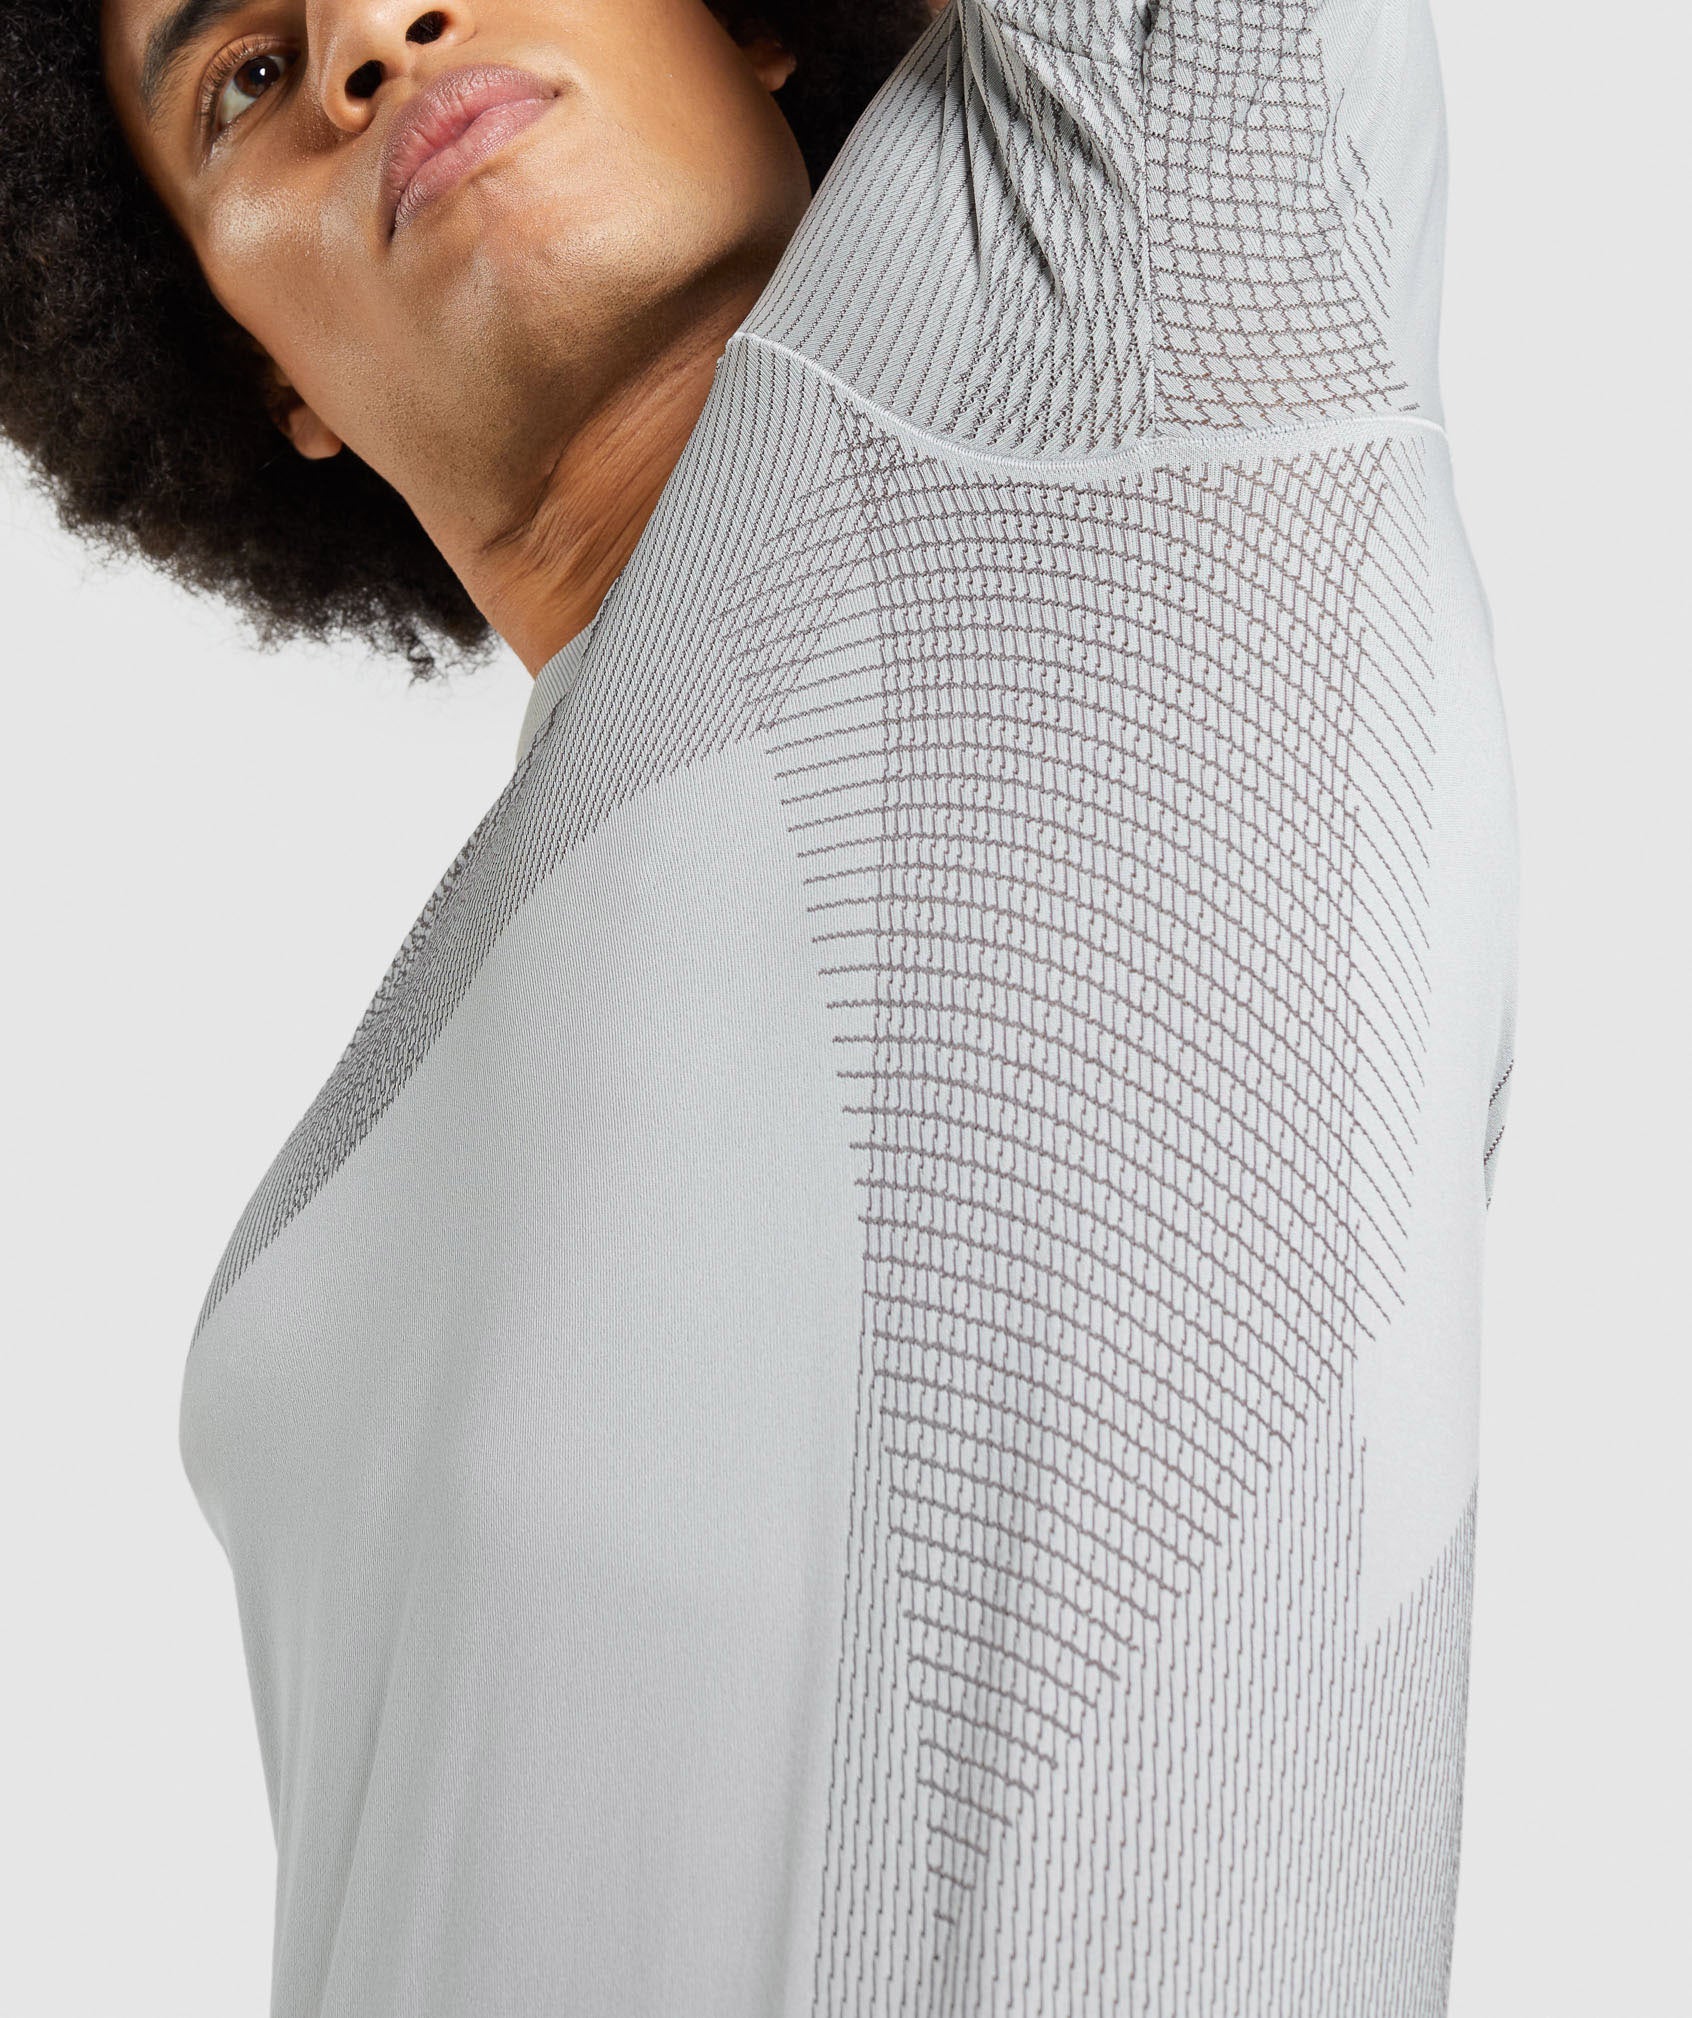 Apex Seamless T-Shirt in Light Grey/Onyx Grey - view 6